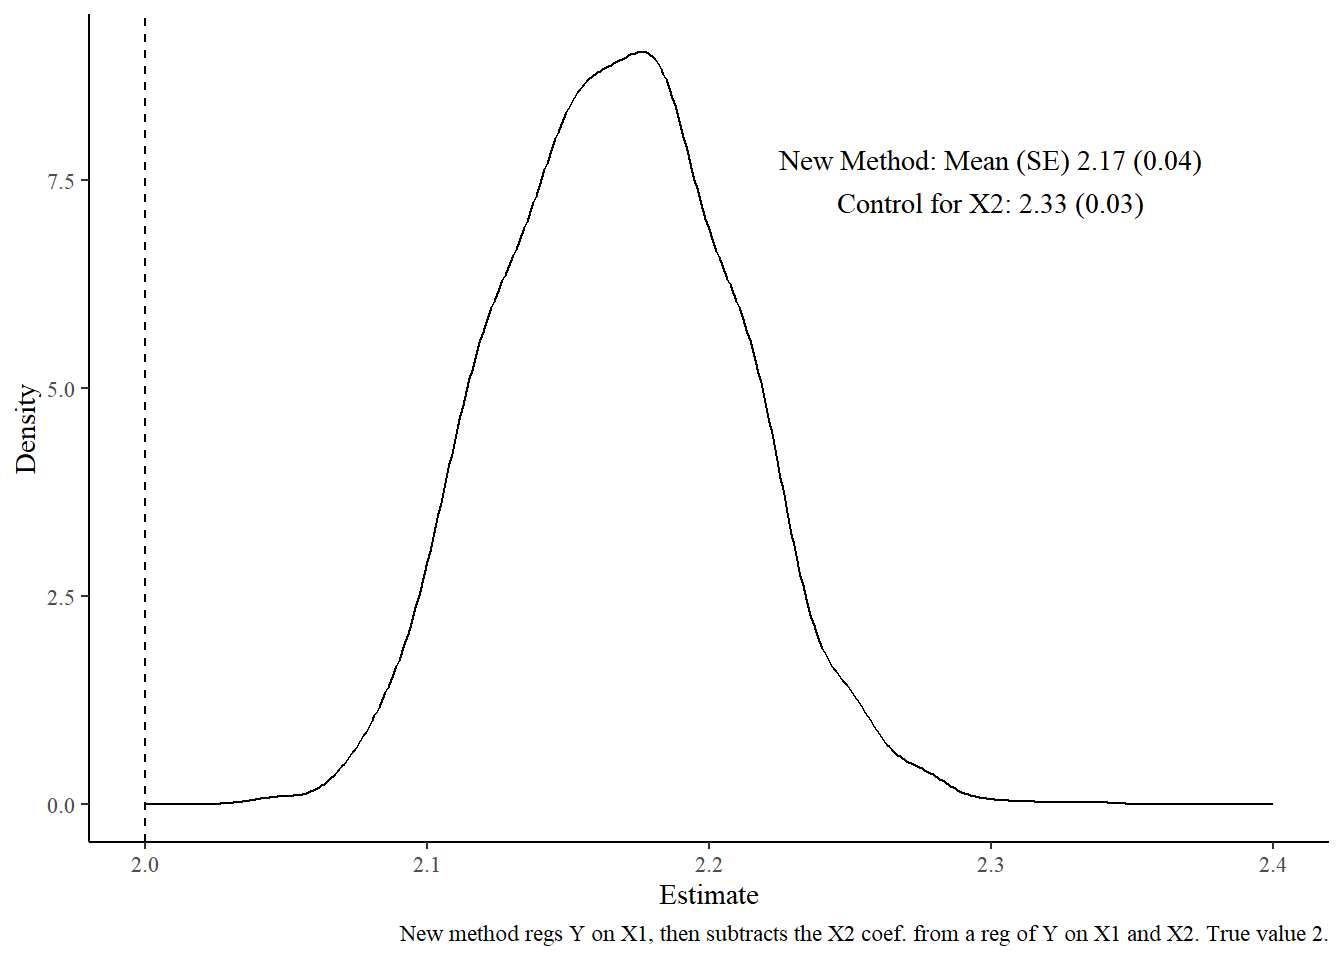 Sampling distribution centered around 2 + 1/6